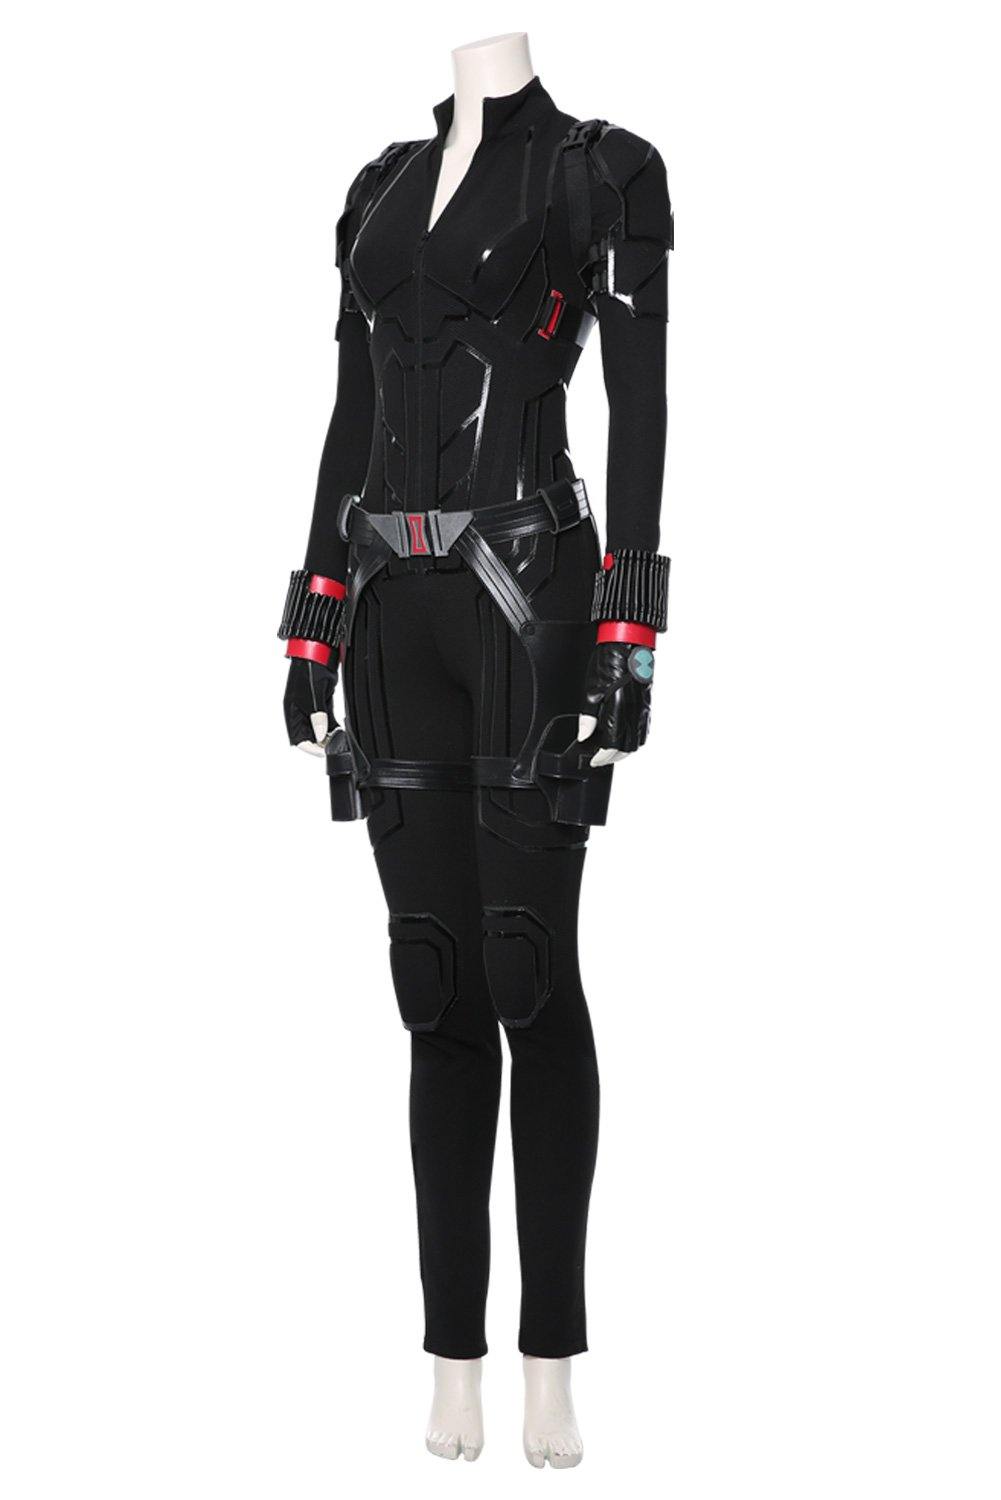 Avengers 4 Avengers: Endgame Black Widow Jumpsuit Cosplay Kostüm Version B - cosplaycartde